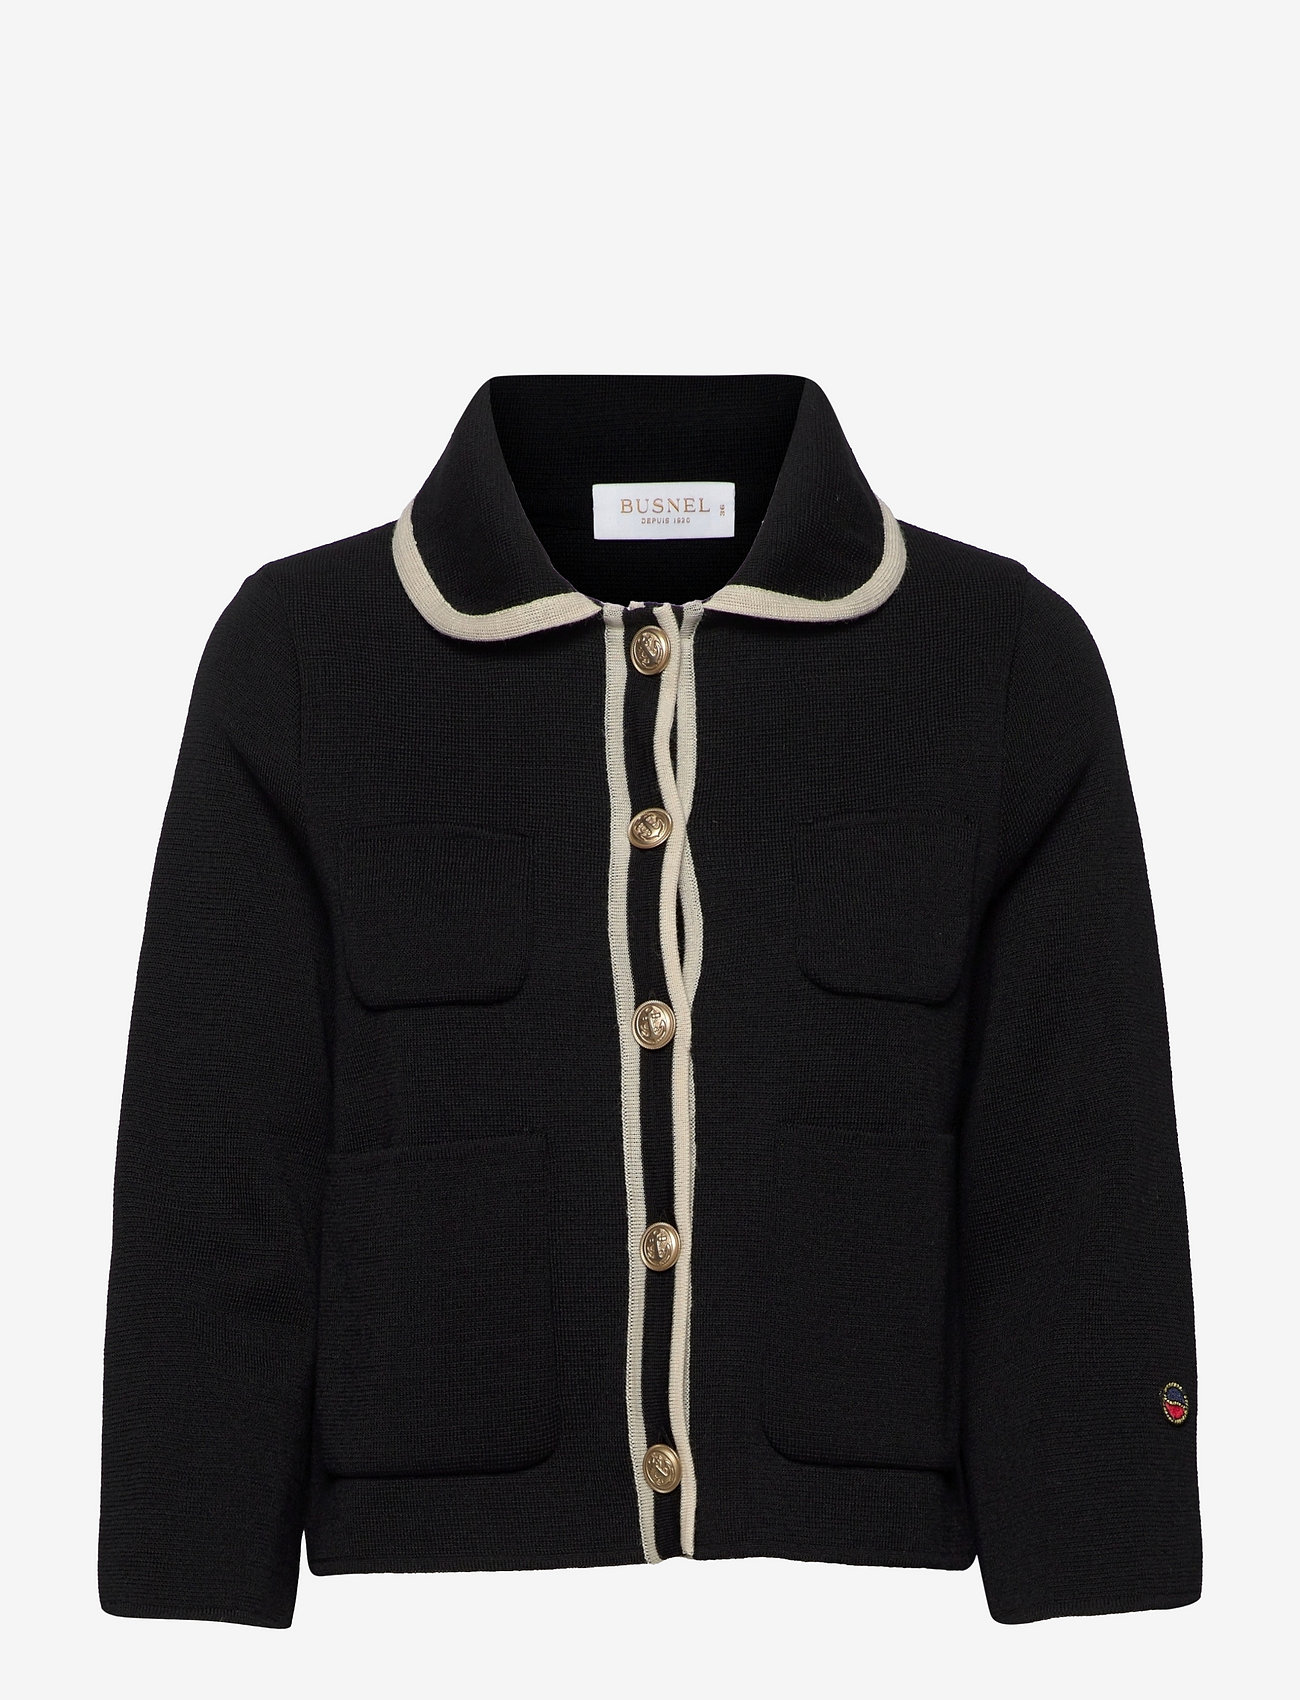 BUSNEL - Anais jacket - black/grain - 0